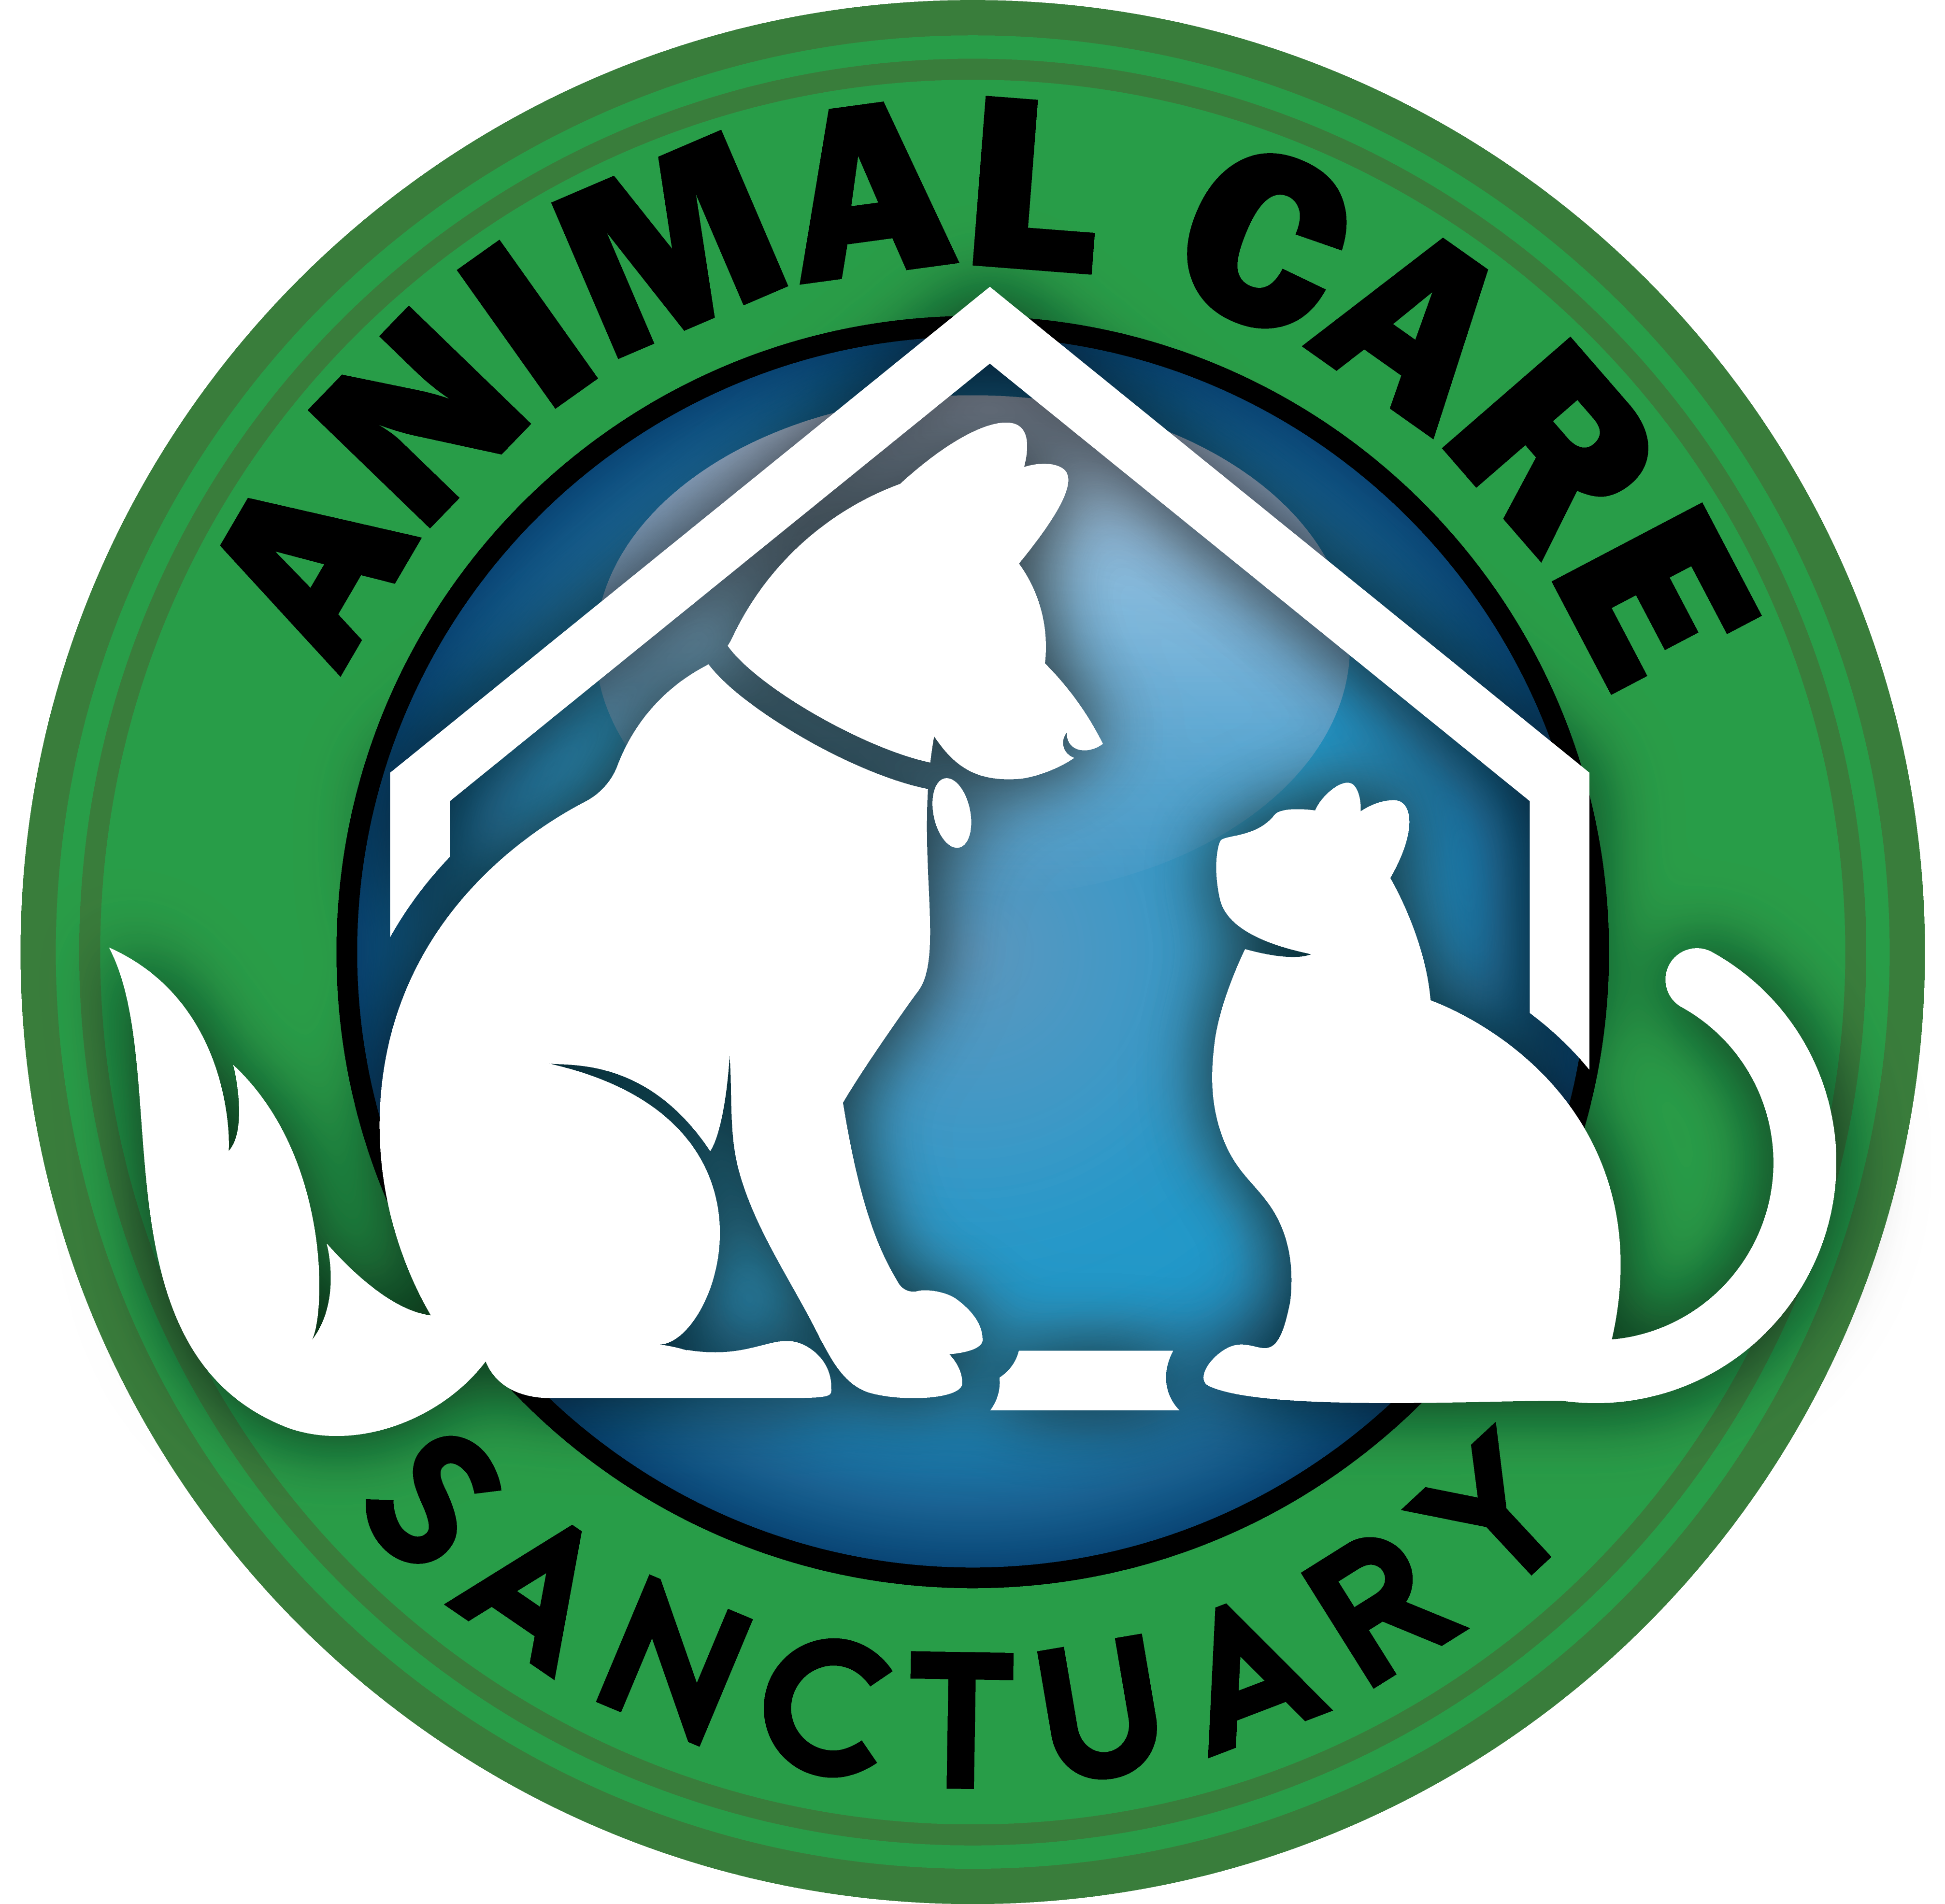 Animal Care Sanctuary